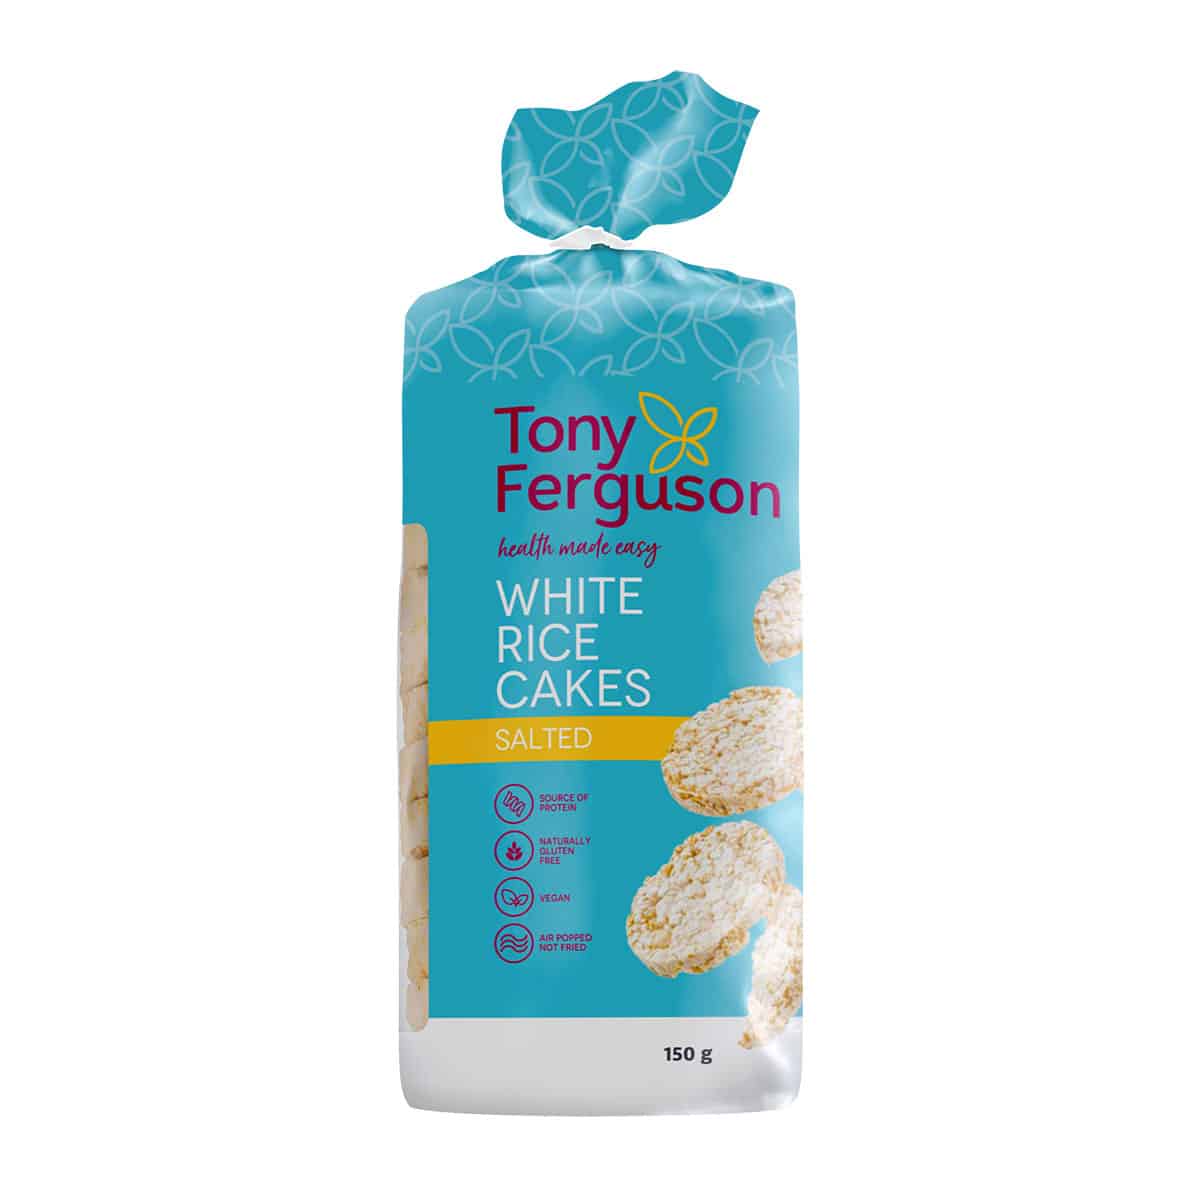 Tony Ferguson White Rice Cakes Salted - 150g